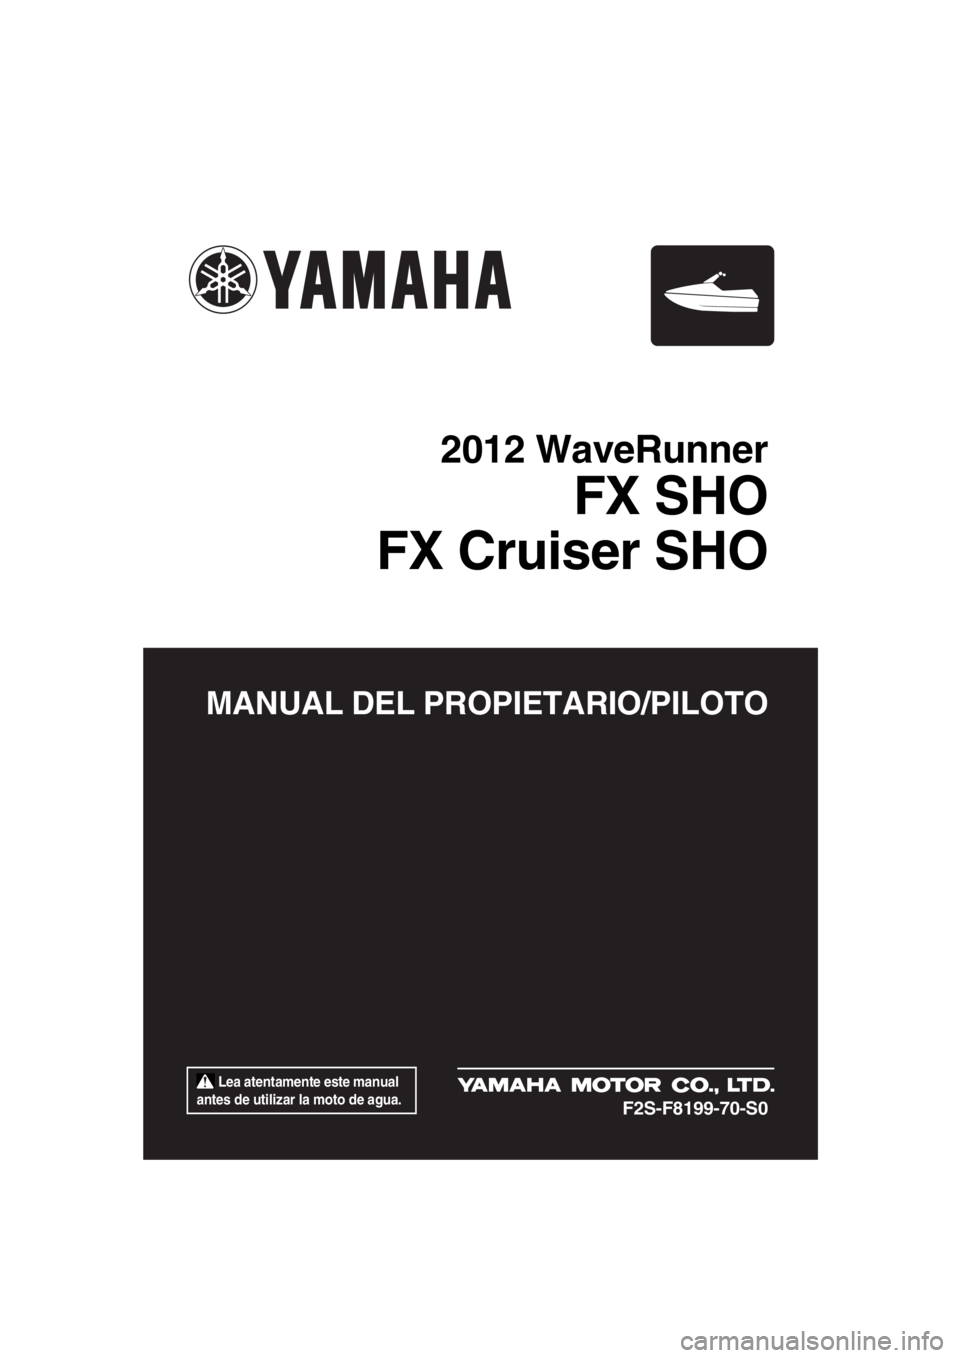 YAMAHA FX SHO 2012  Manuale de Empleo (in Spanish) 